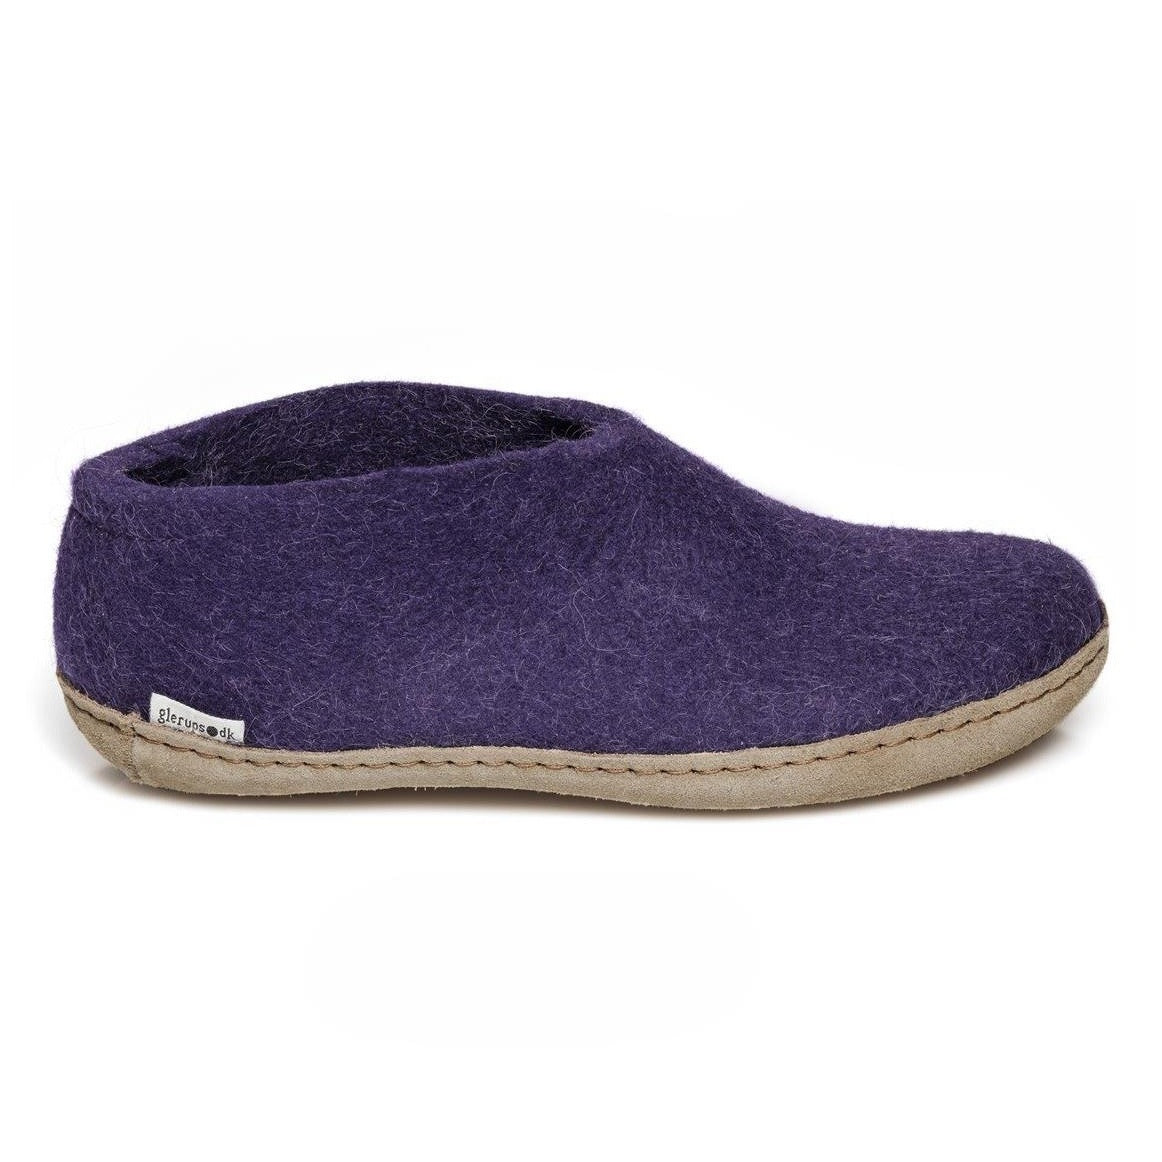 Glerups slipper shoe cut leather sole purple